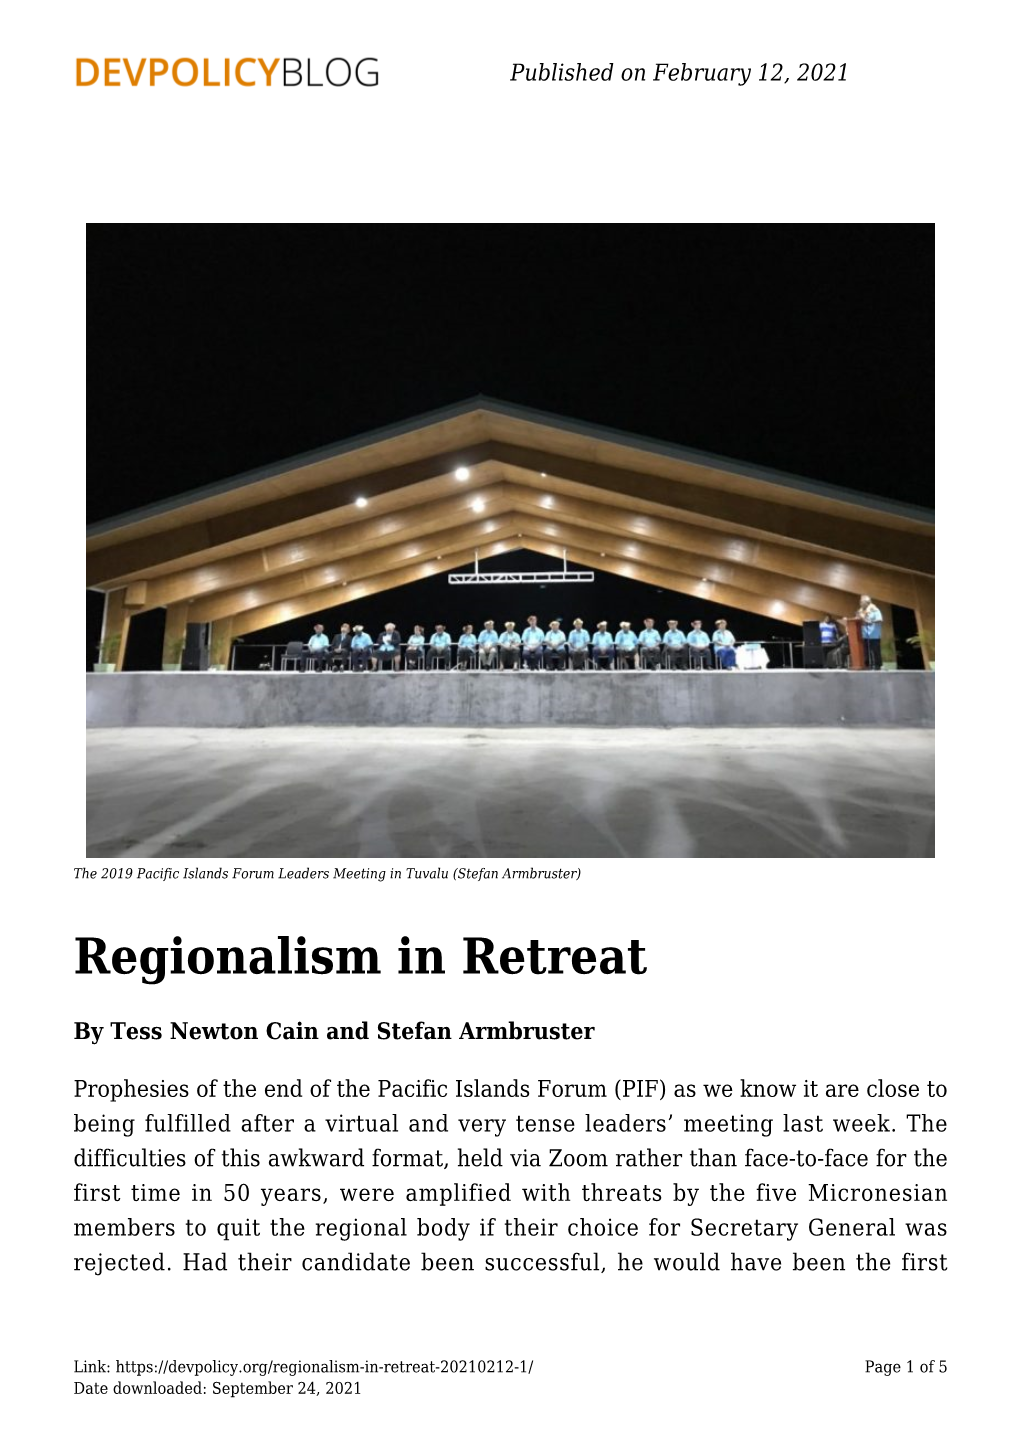 Regionalism in Retreat